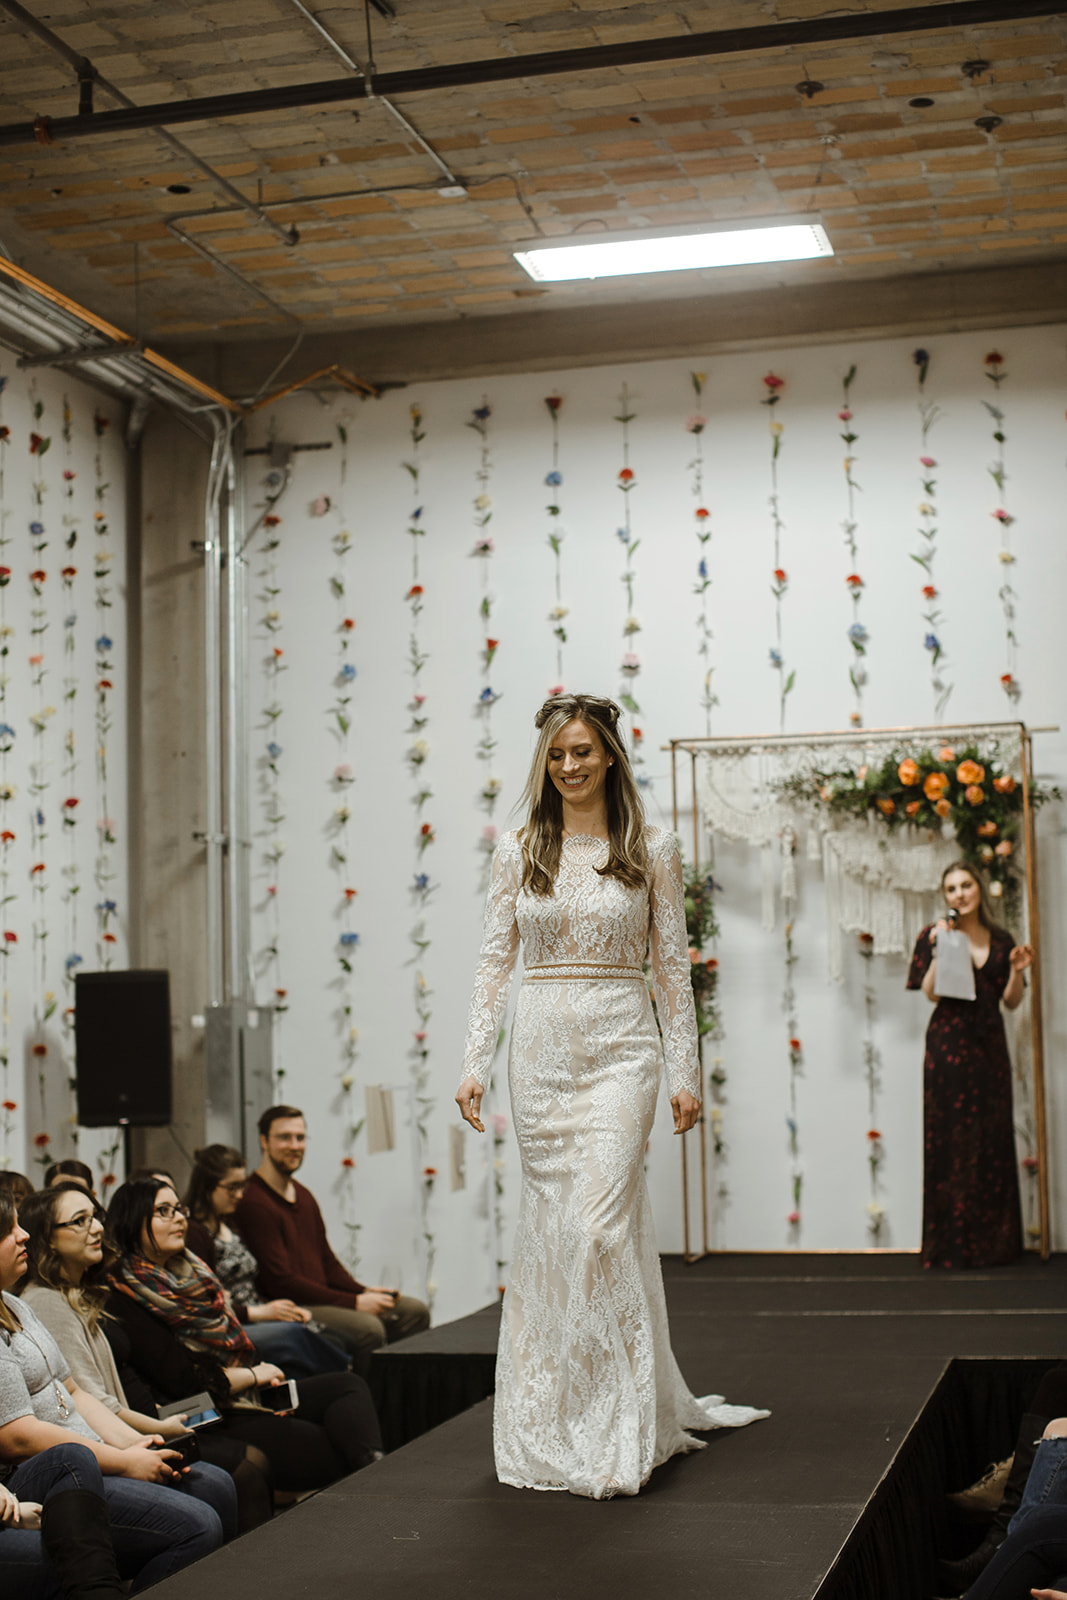 spokane wedding dress long sleeve fashion show bride runway